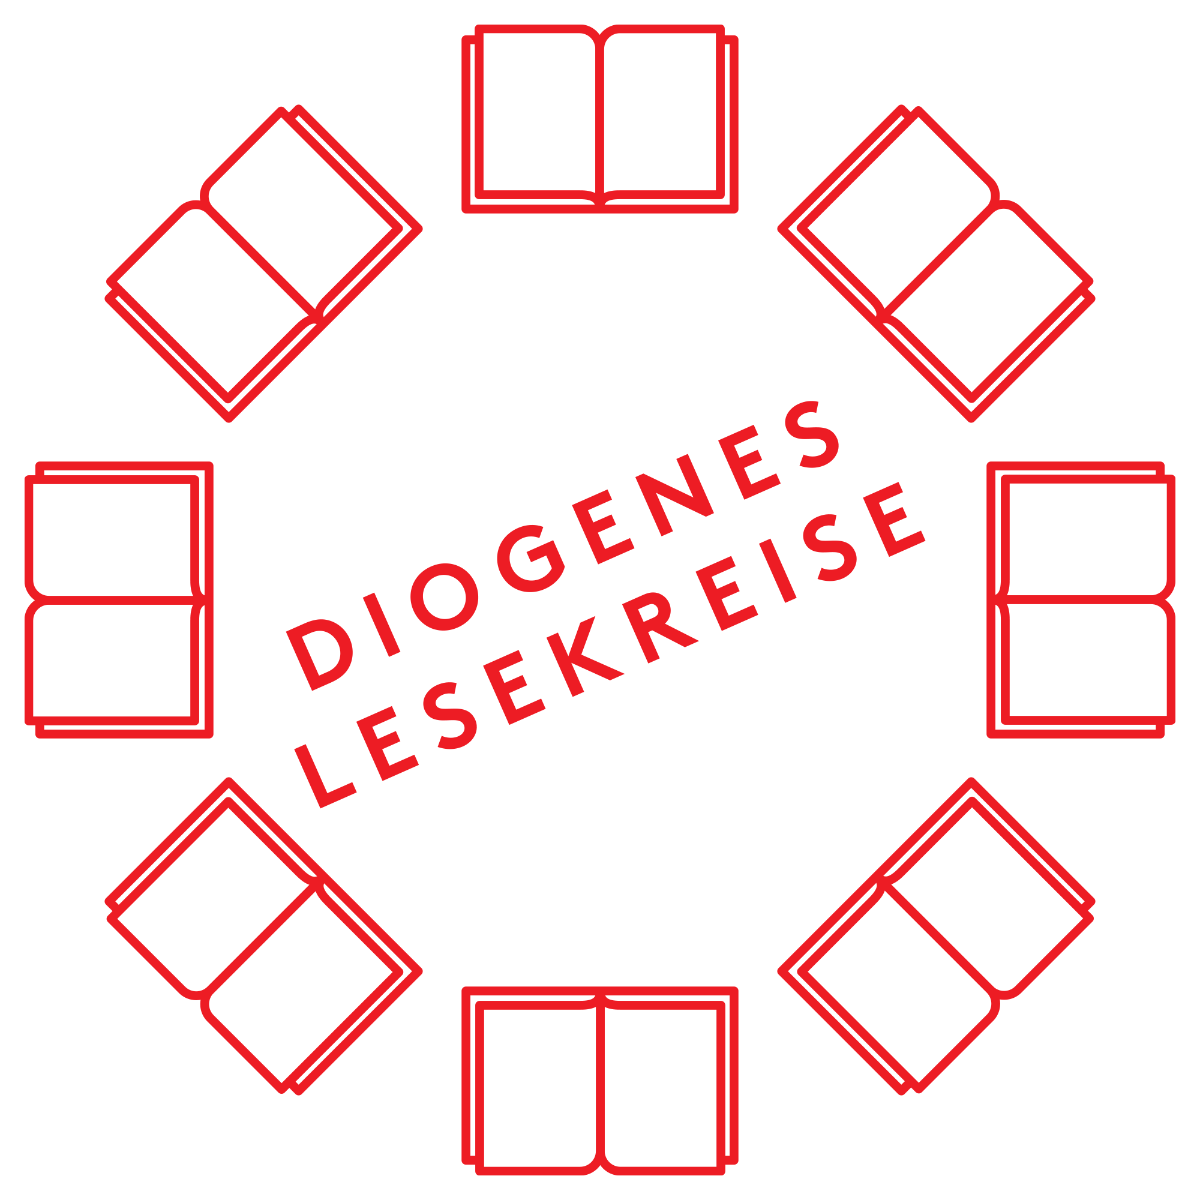 Diogenes Lesekreise - Logo